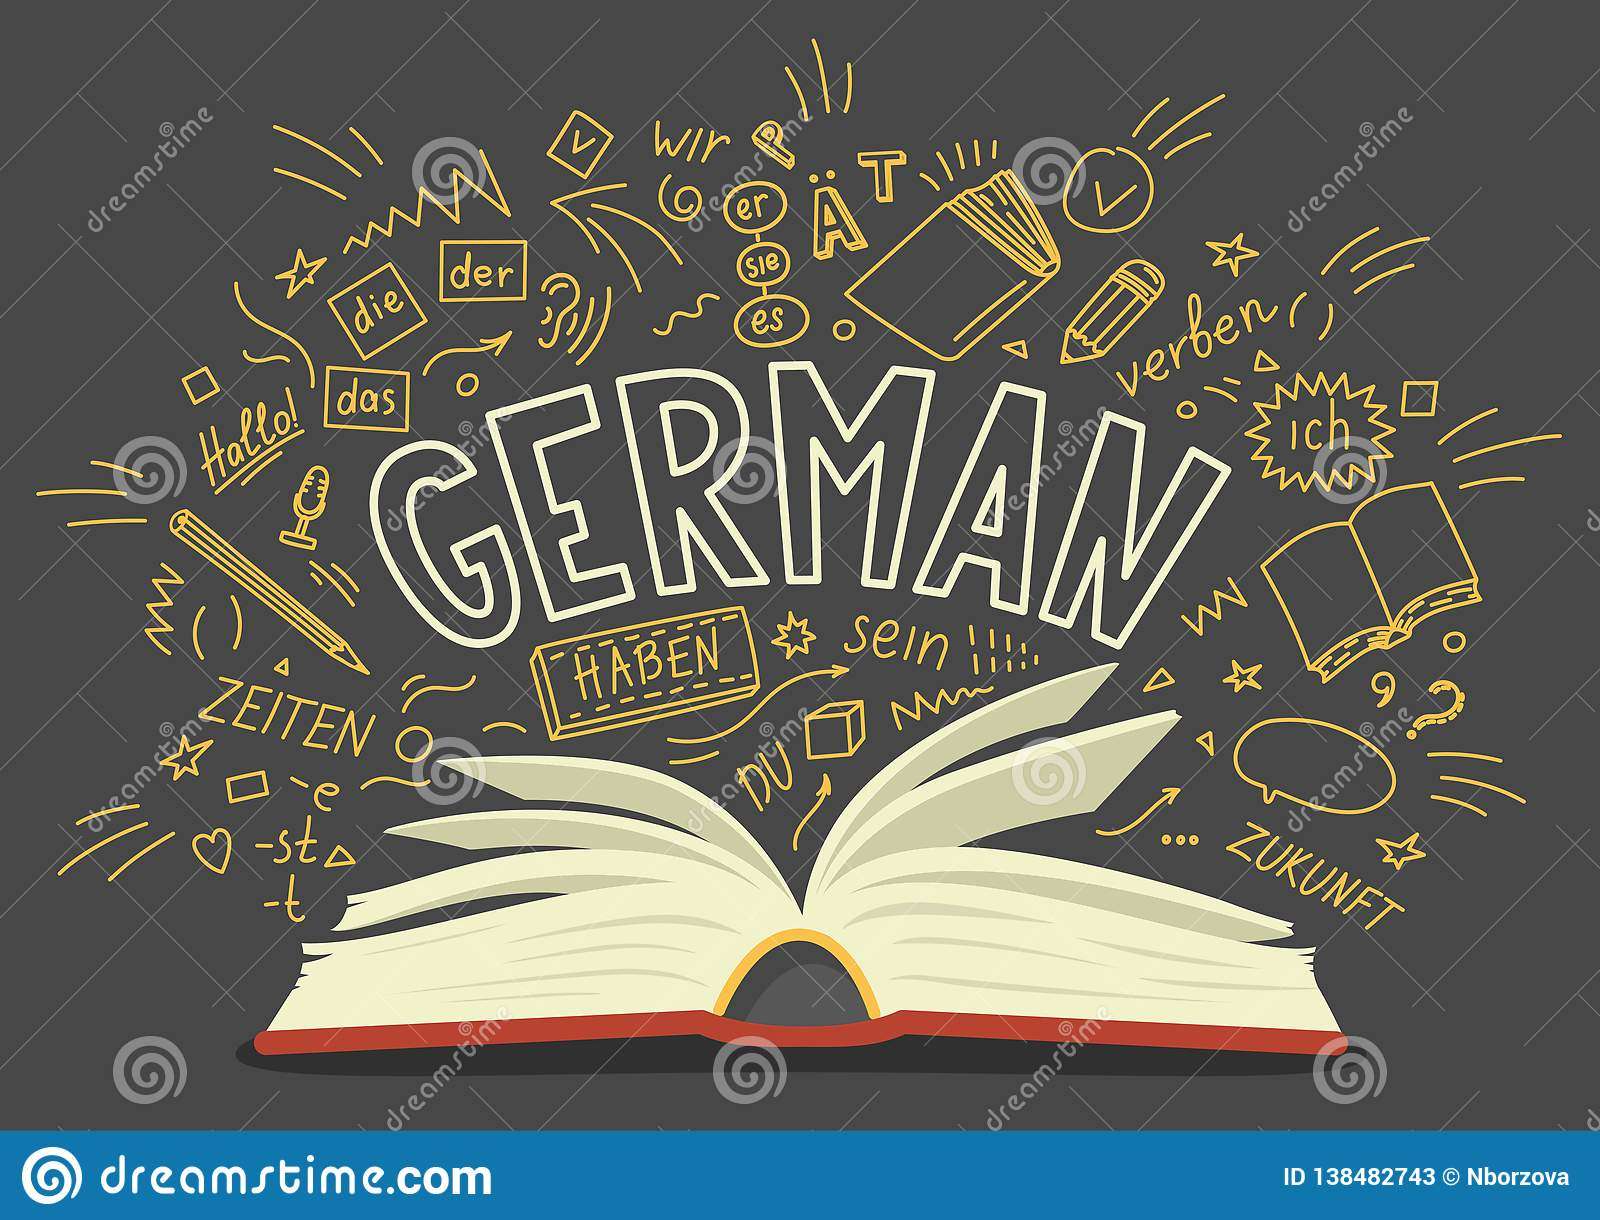 German, Language classes; Exp: More than 10 year